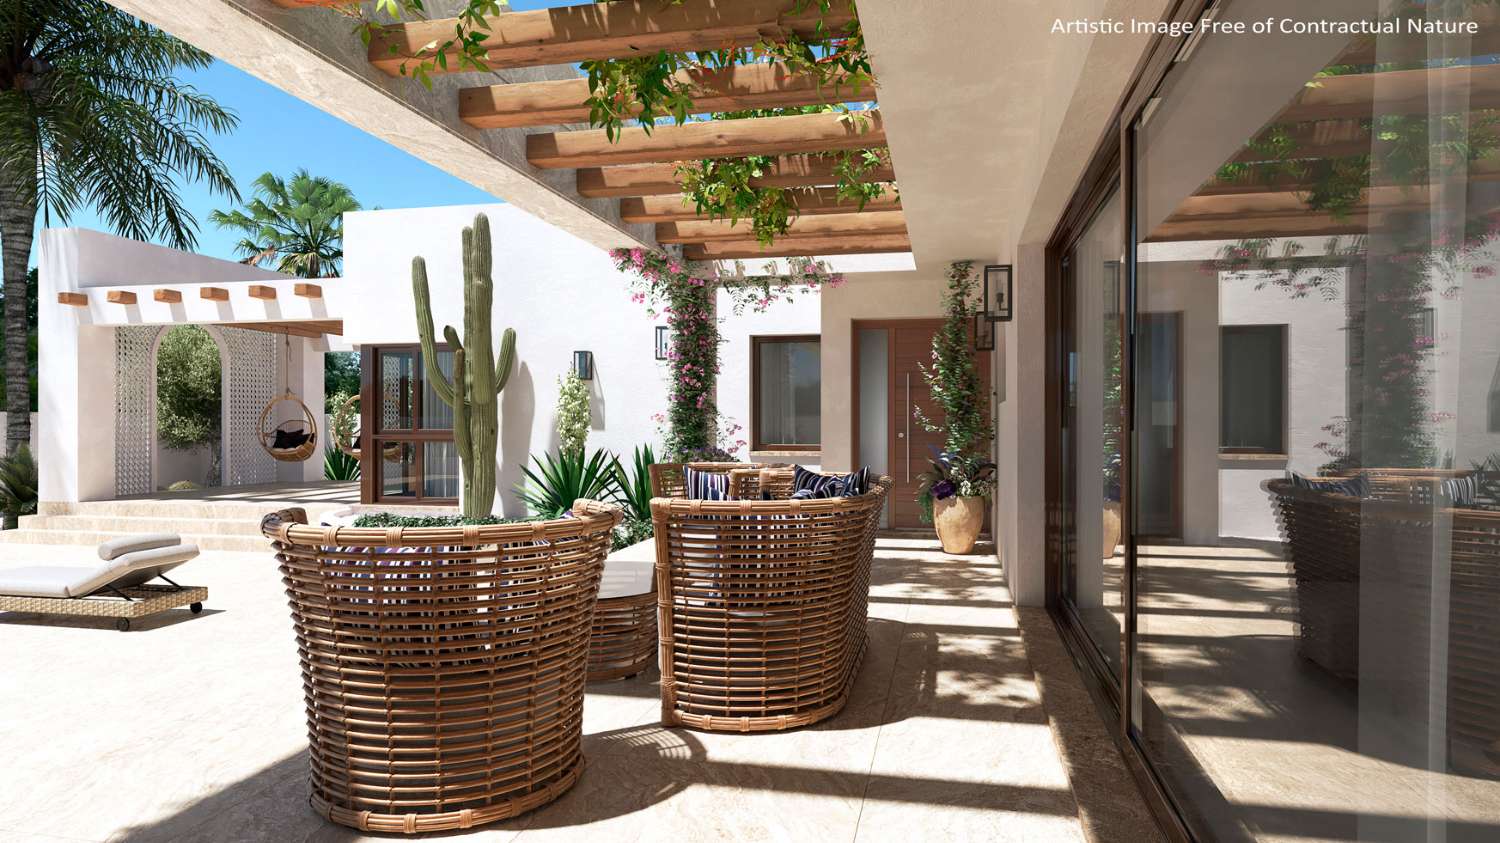 Splendid new single storey villa with swimming pool in Ciudad Quesada